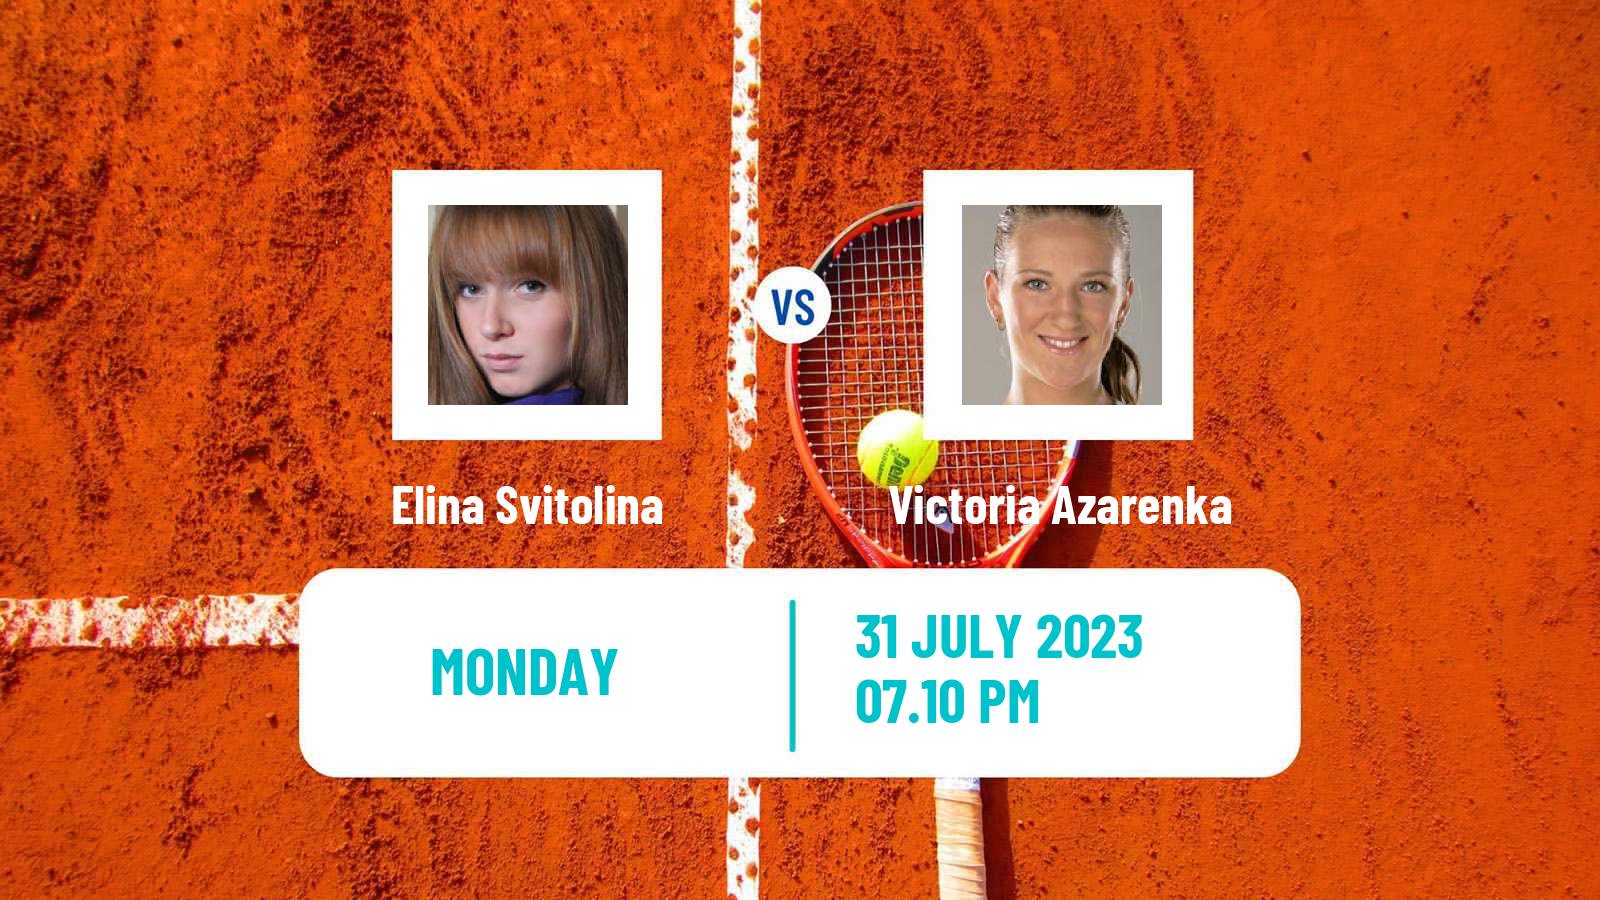 Tennis WTA Washington Elina Svitolina - Victoria Azarenka